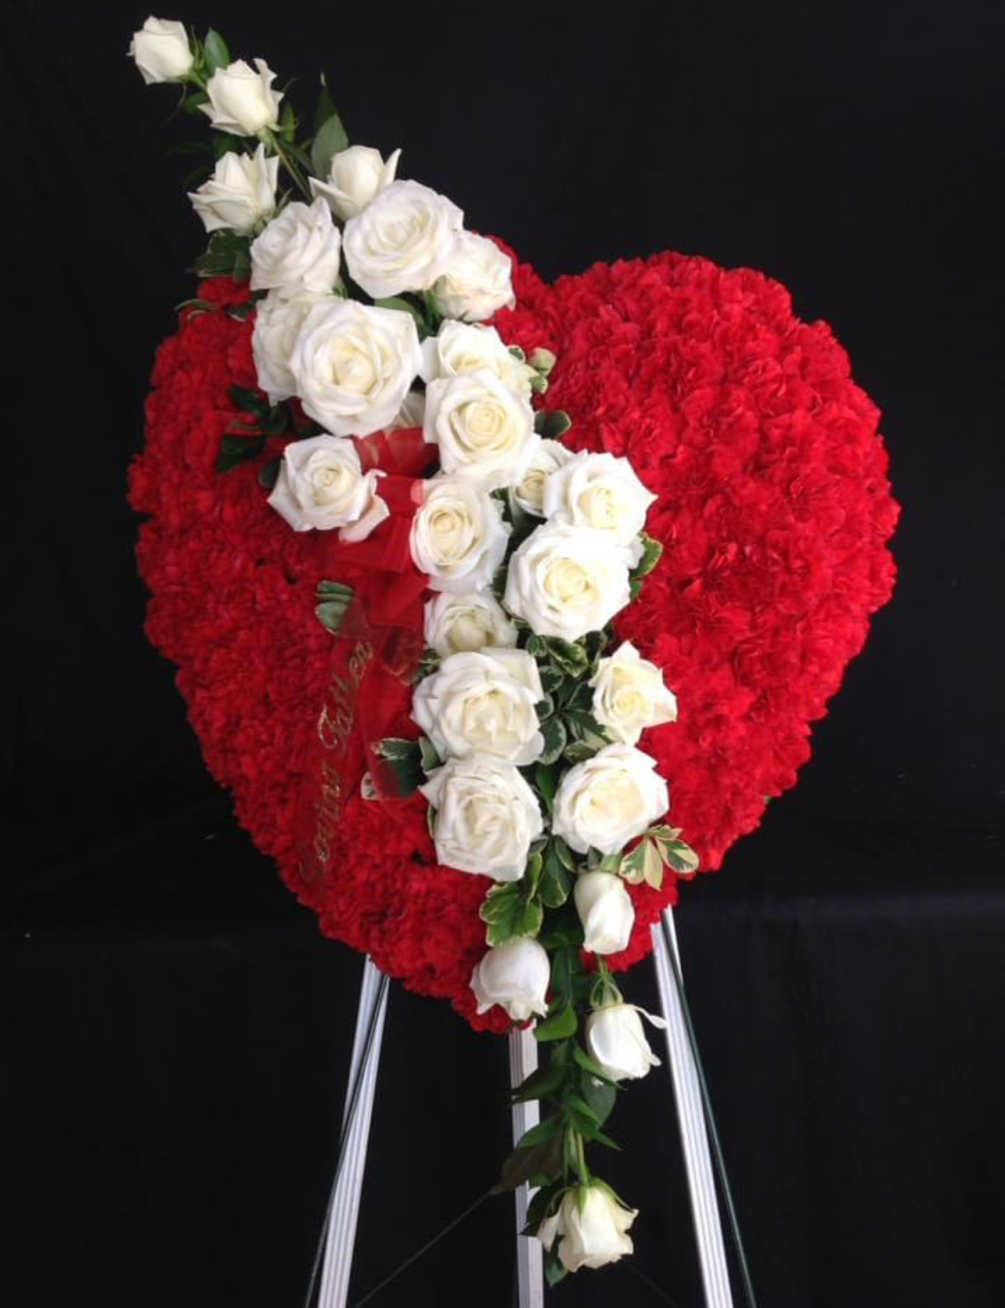 Large heart, includes 2 dozen roses